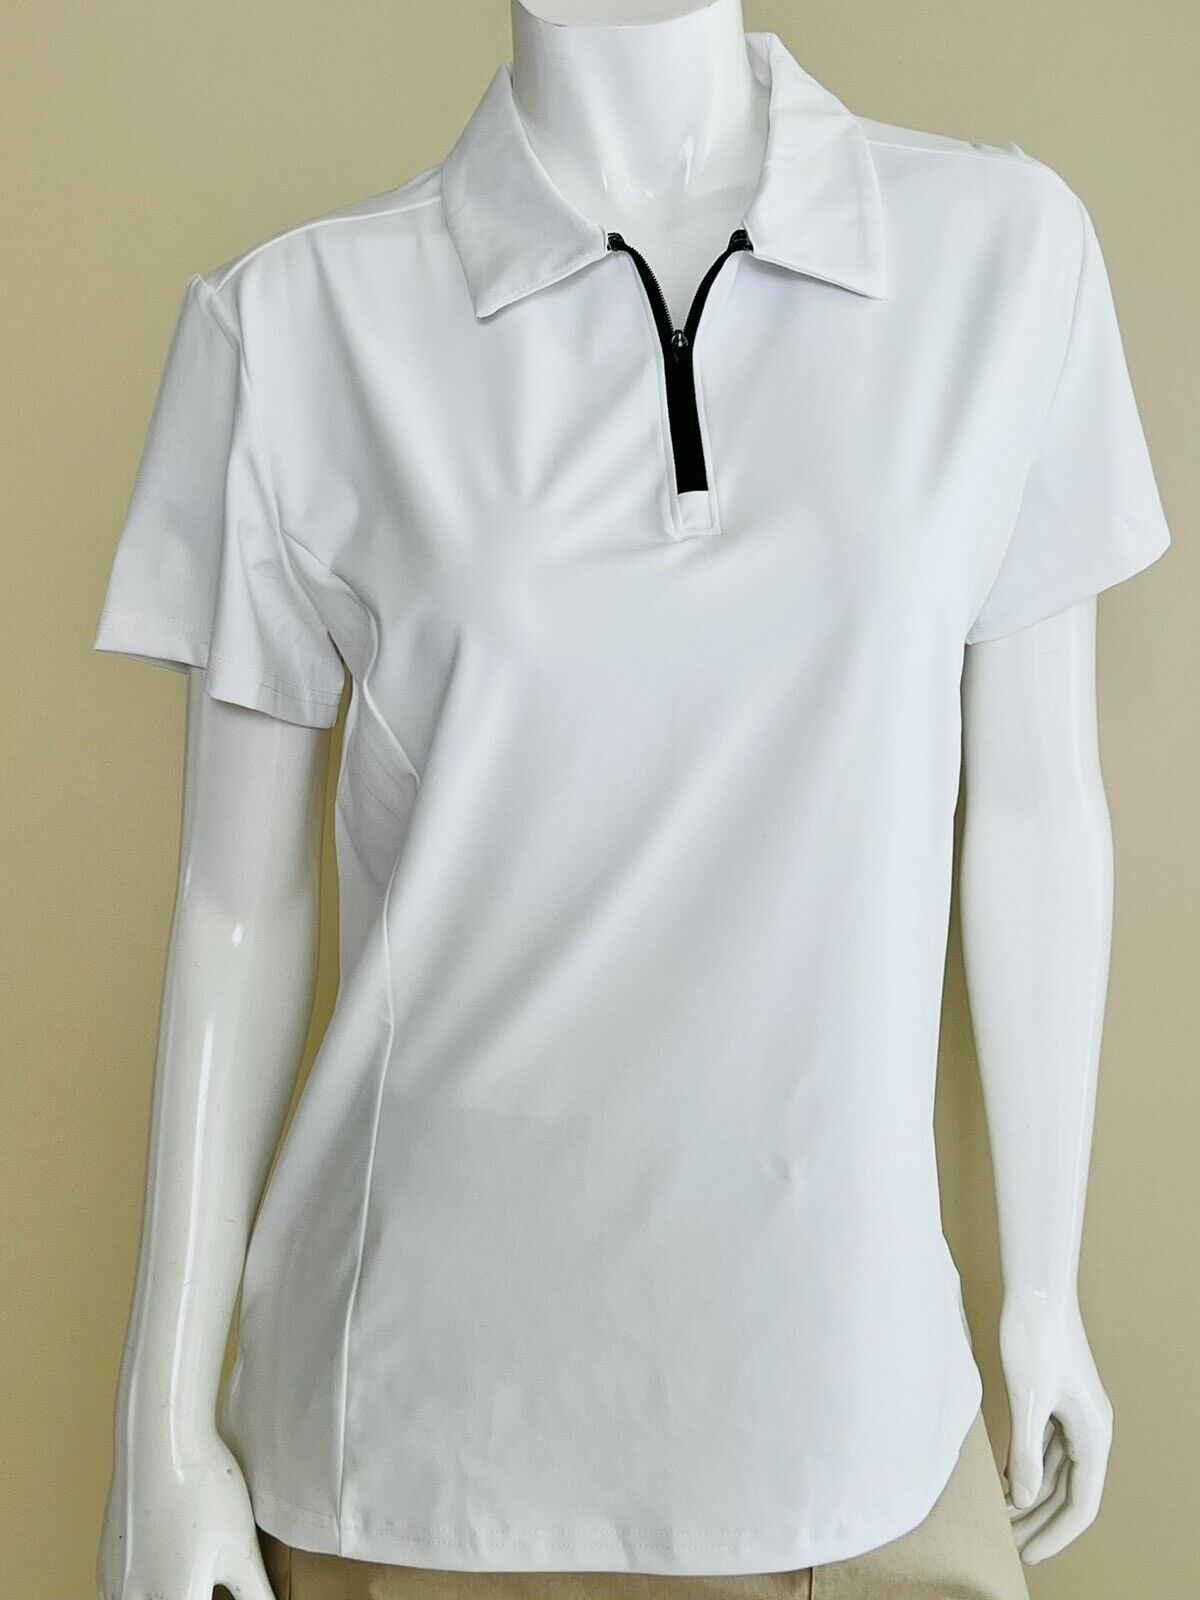 VIODIV Women's Short Sleeve Polo Shirts Quick Dry Golf Sport Sz L